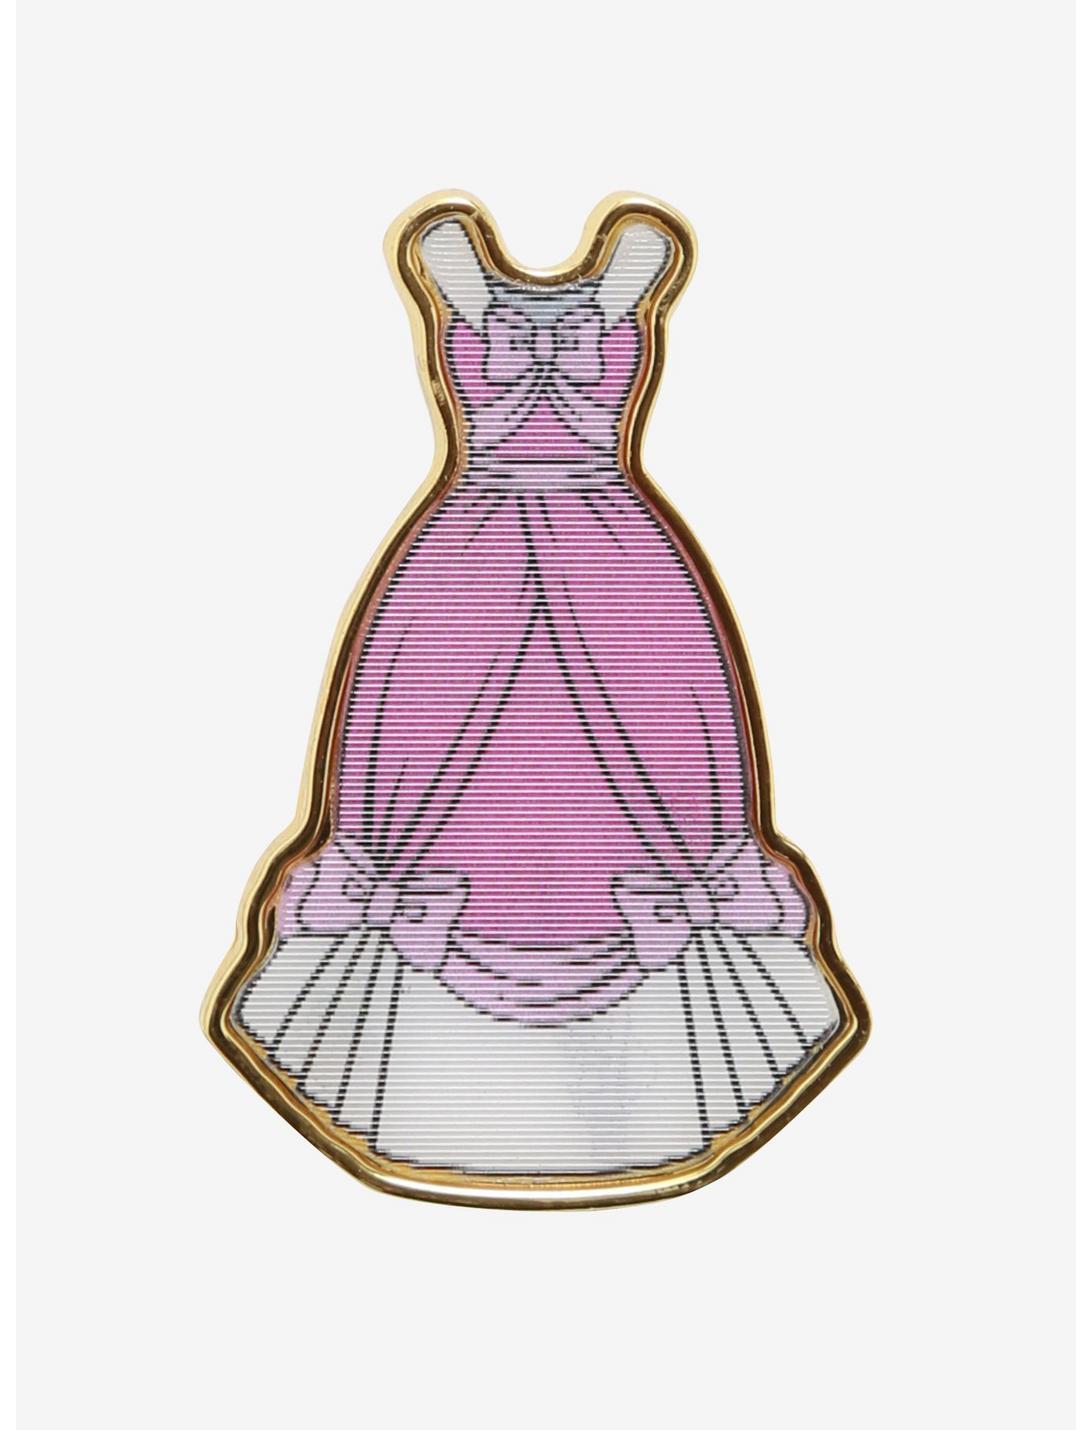 Loungefly Disney Cinderella Dress Lenticular Enamel Pin - BoxLunch Exclusive, , hi-res